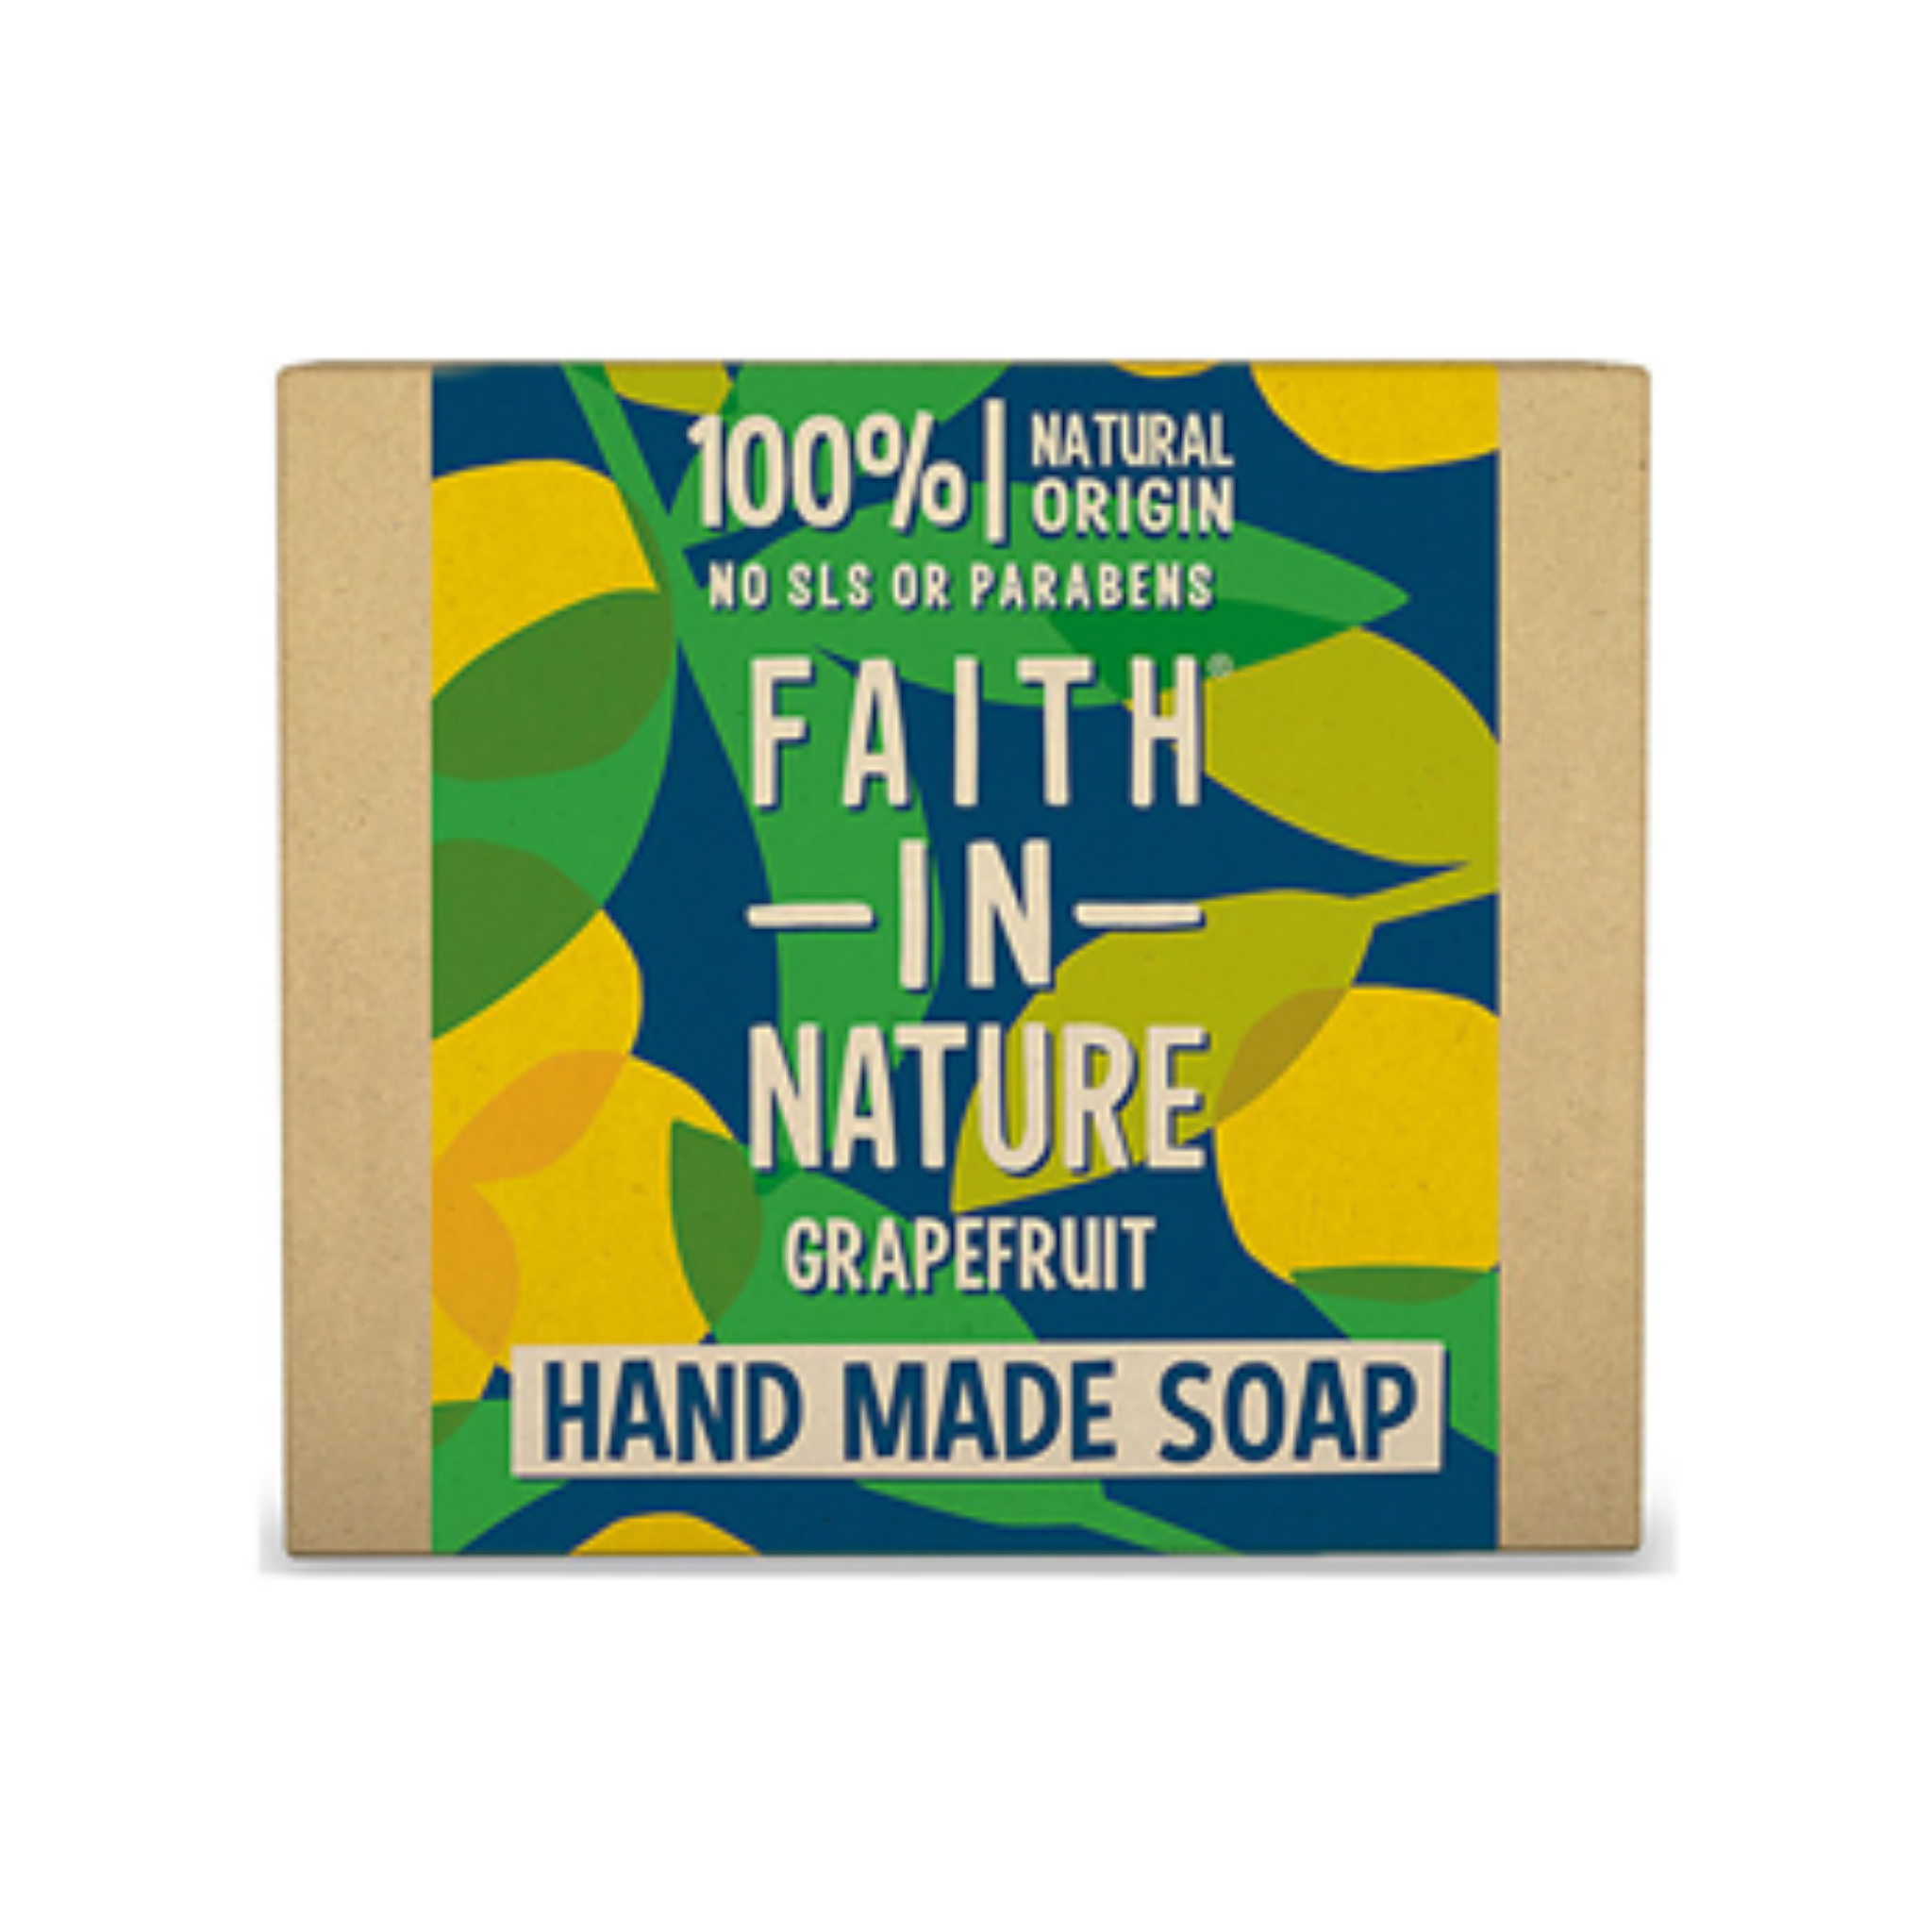 Faith in Nature Grapefruit Soap Bar